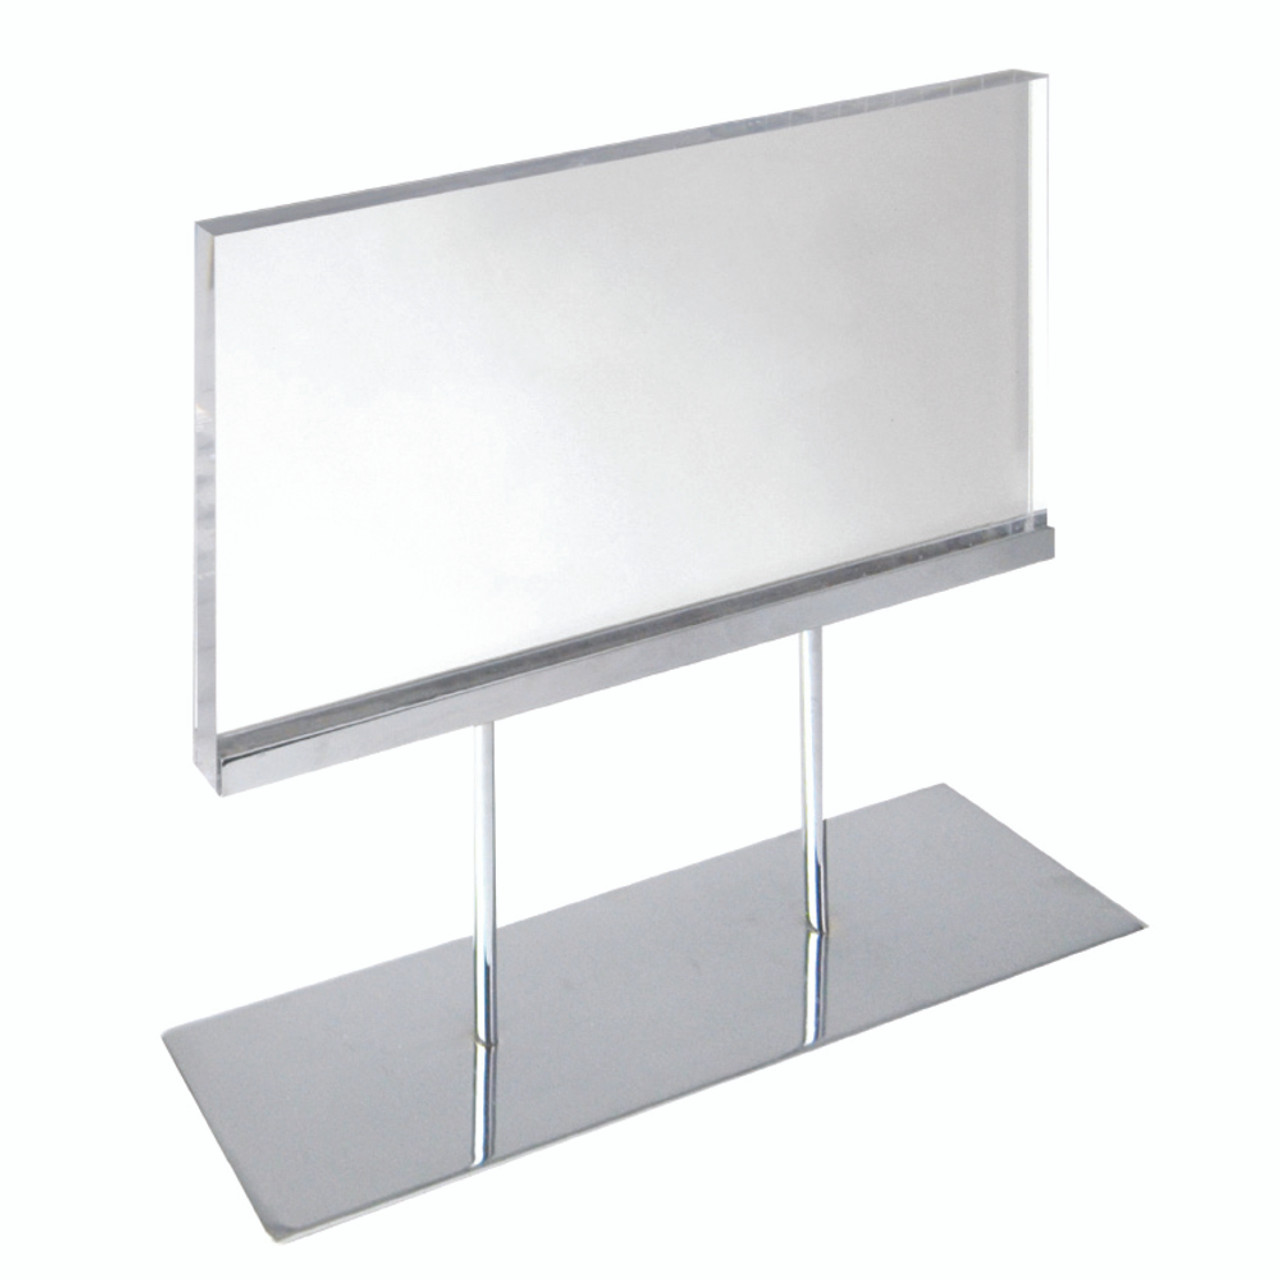 Azar Displays 7 x 5.5 Pedestal Sign Holder Stand